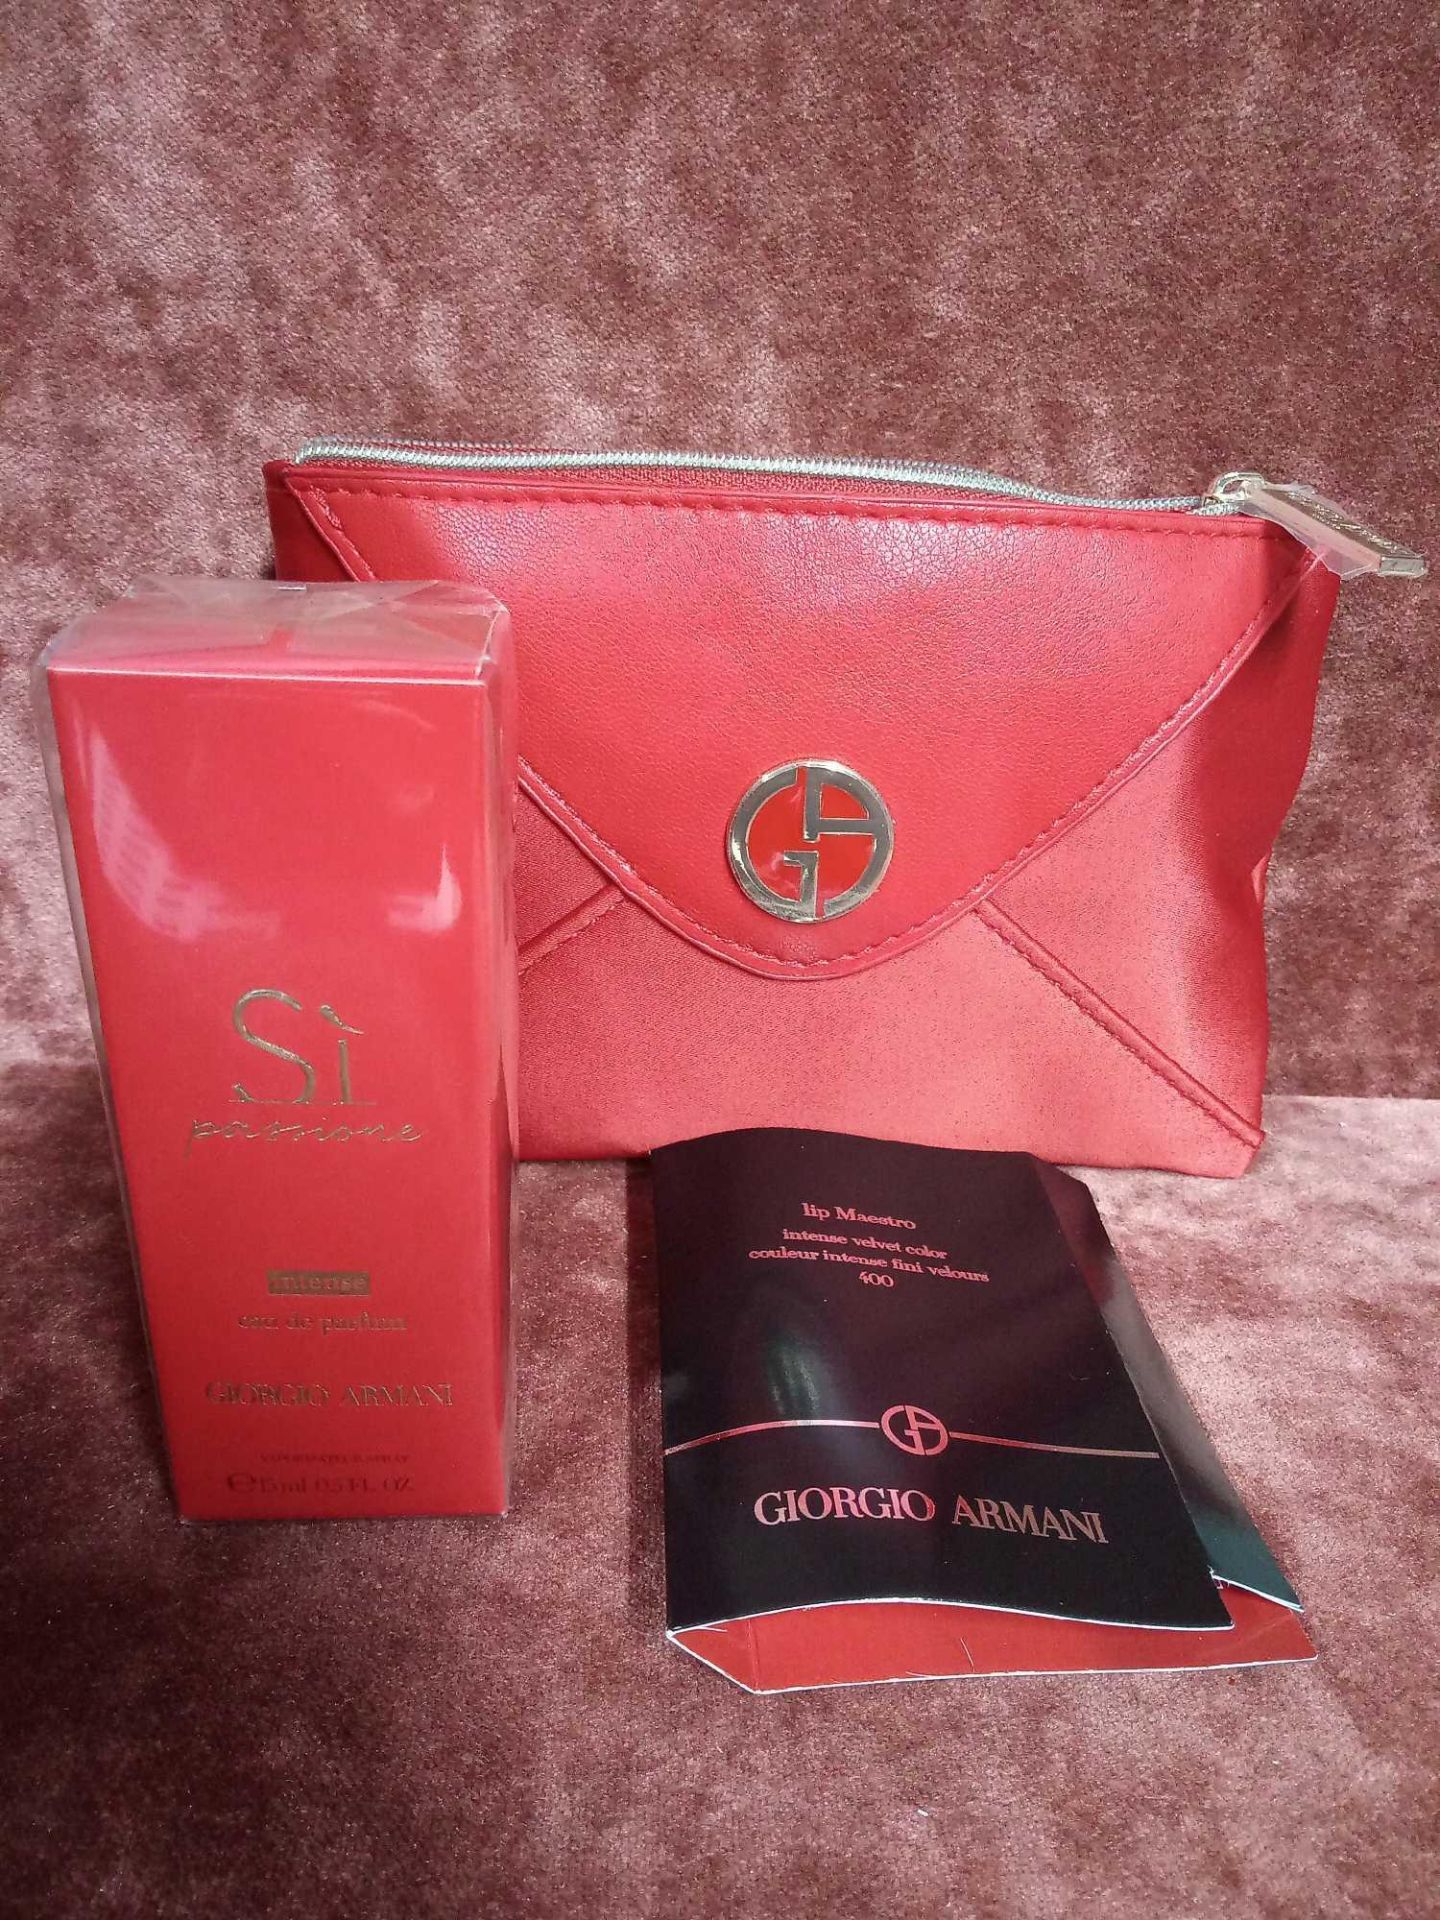 RRP £70 Brand New And Sealed Giorgio Armani Beauty Si Passione Intense Gift Set To Contain Giorgio A - Image 2 of 4